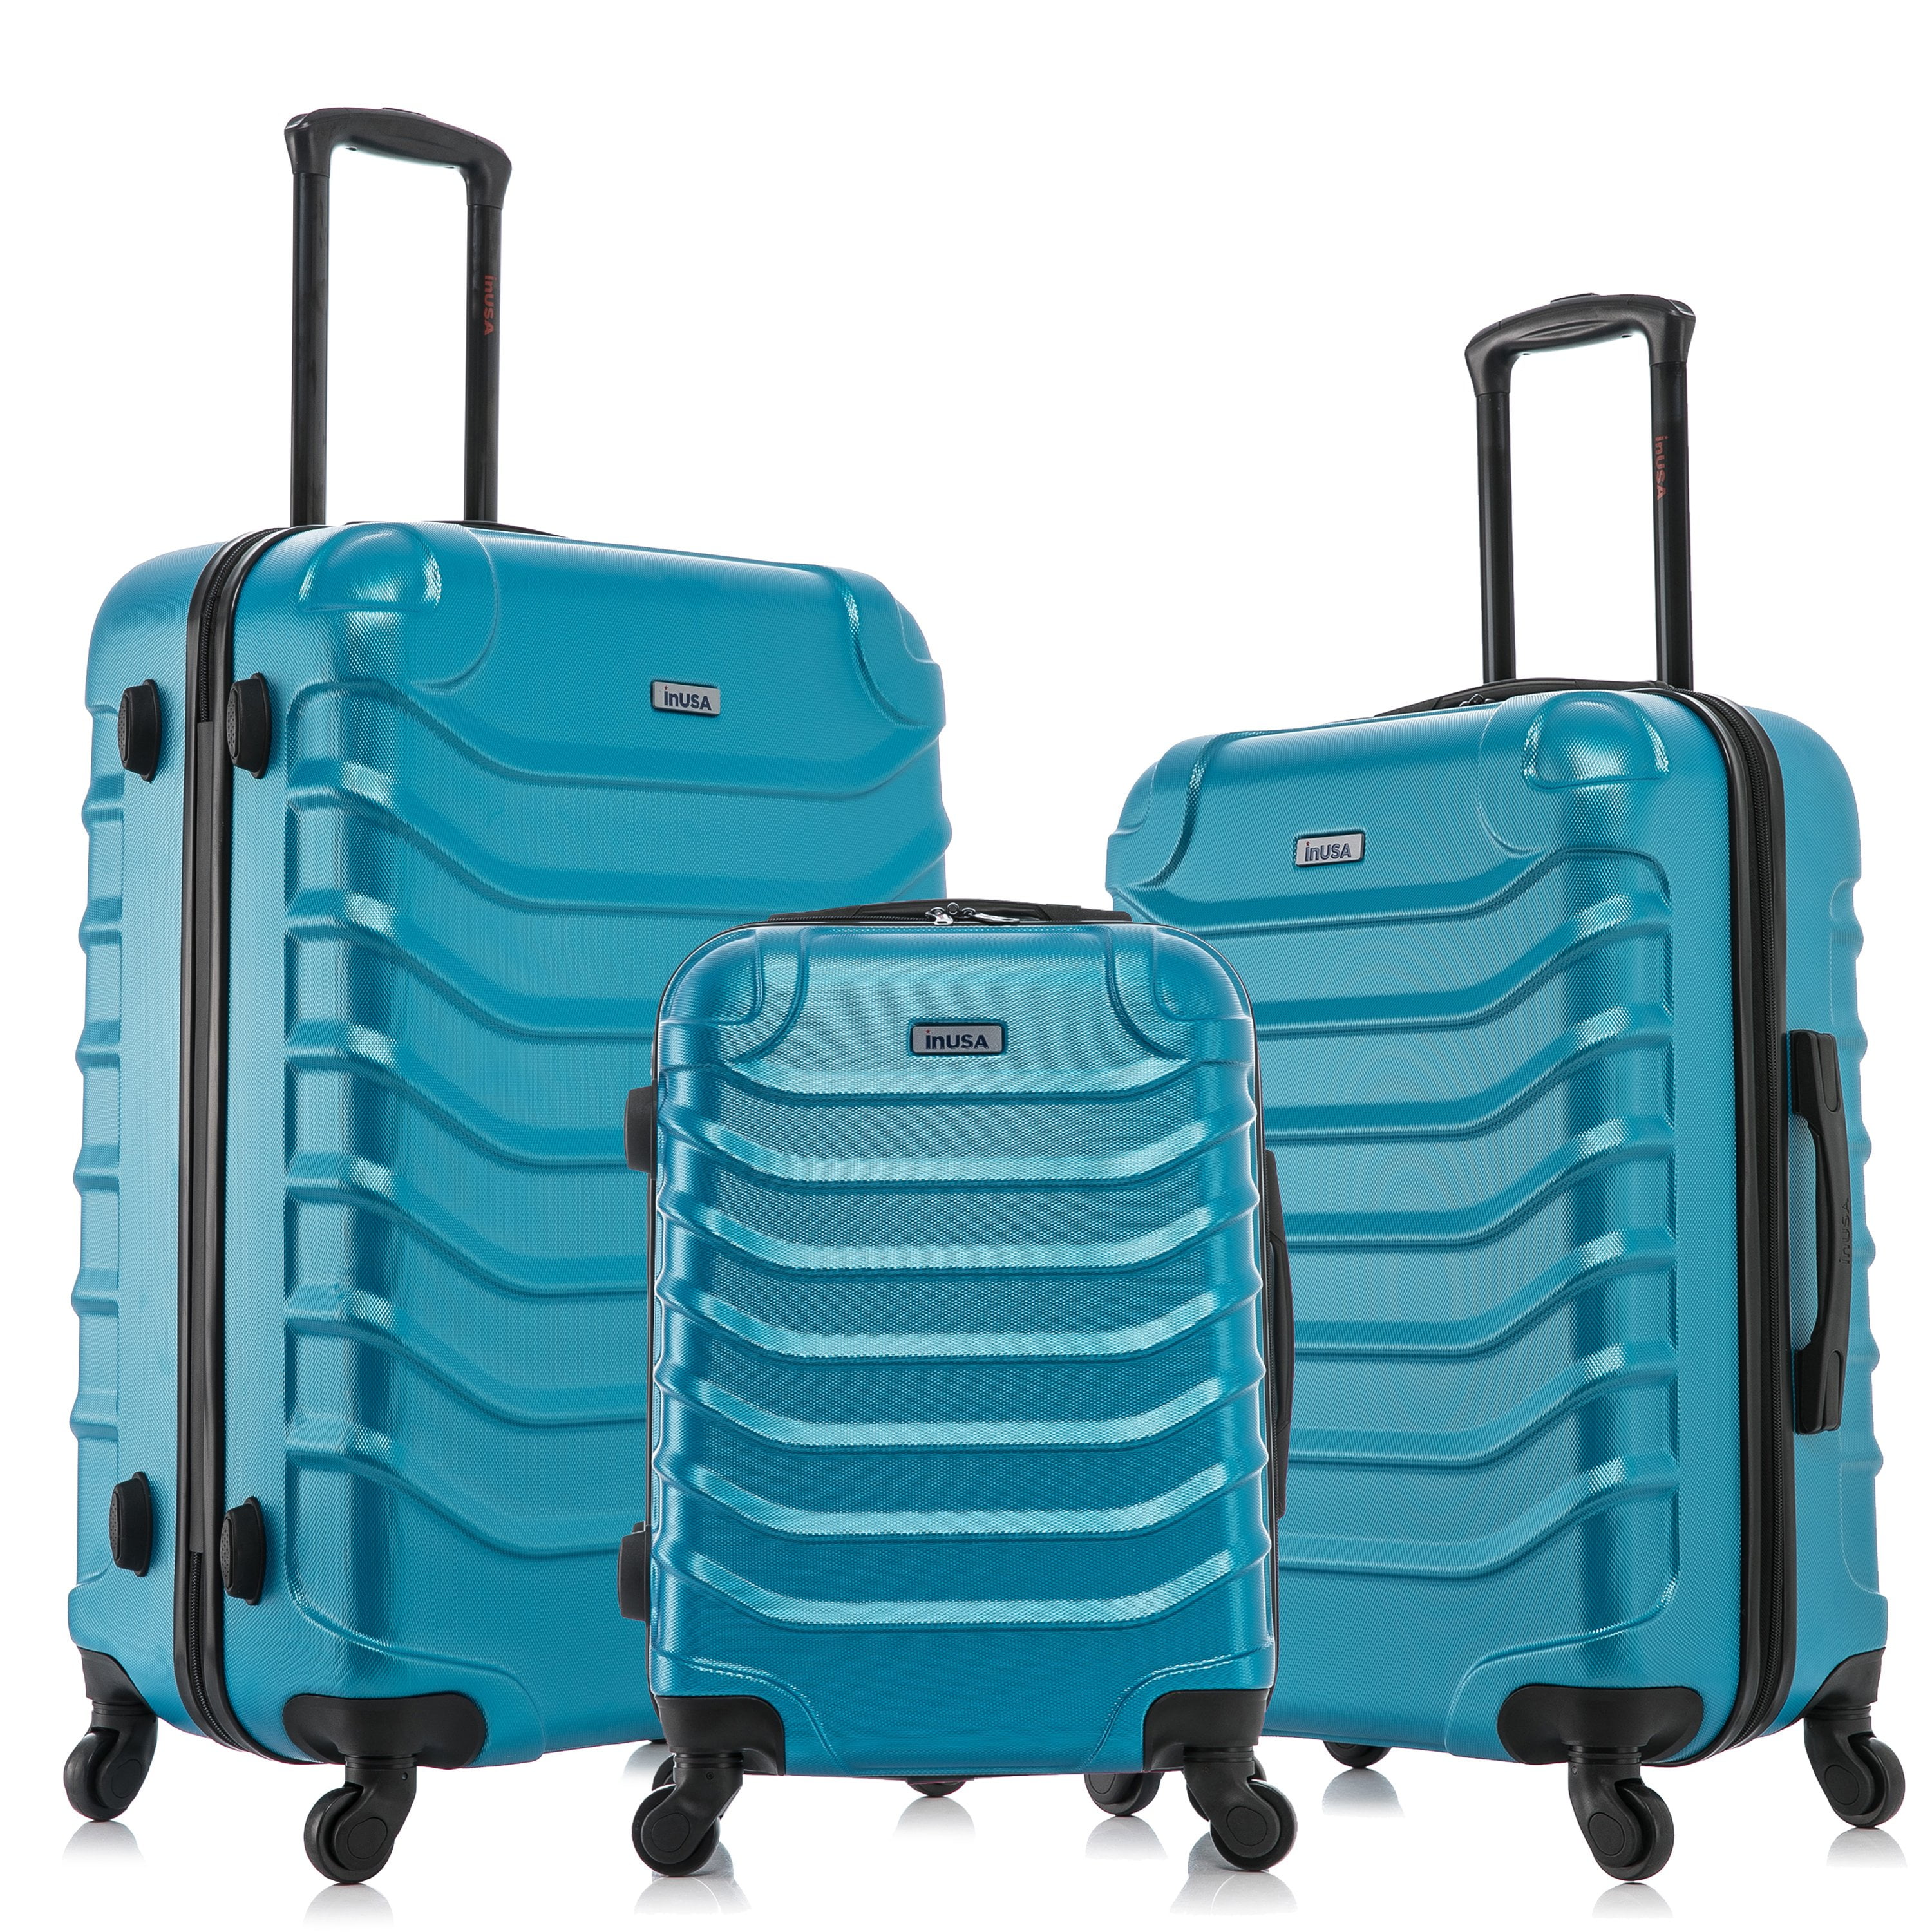 InUSA Endurance 3-Piece Hardside Luggage Sets with Spinner Wheels, Handle,  Trolley, (202428), Teal - Walmart.com